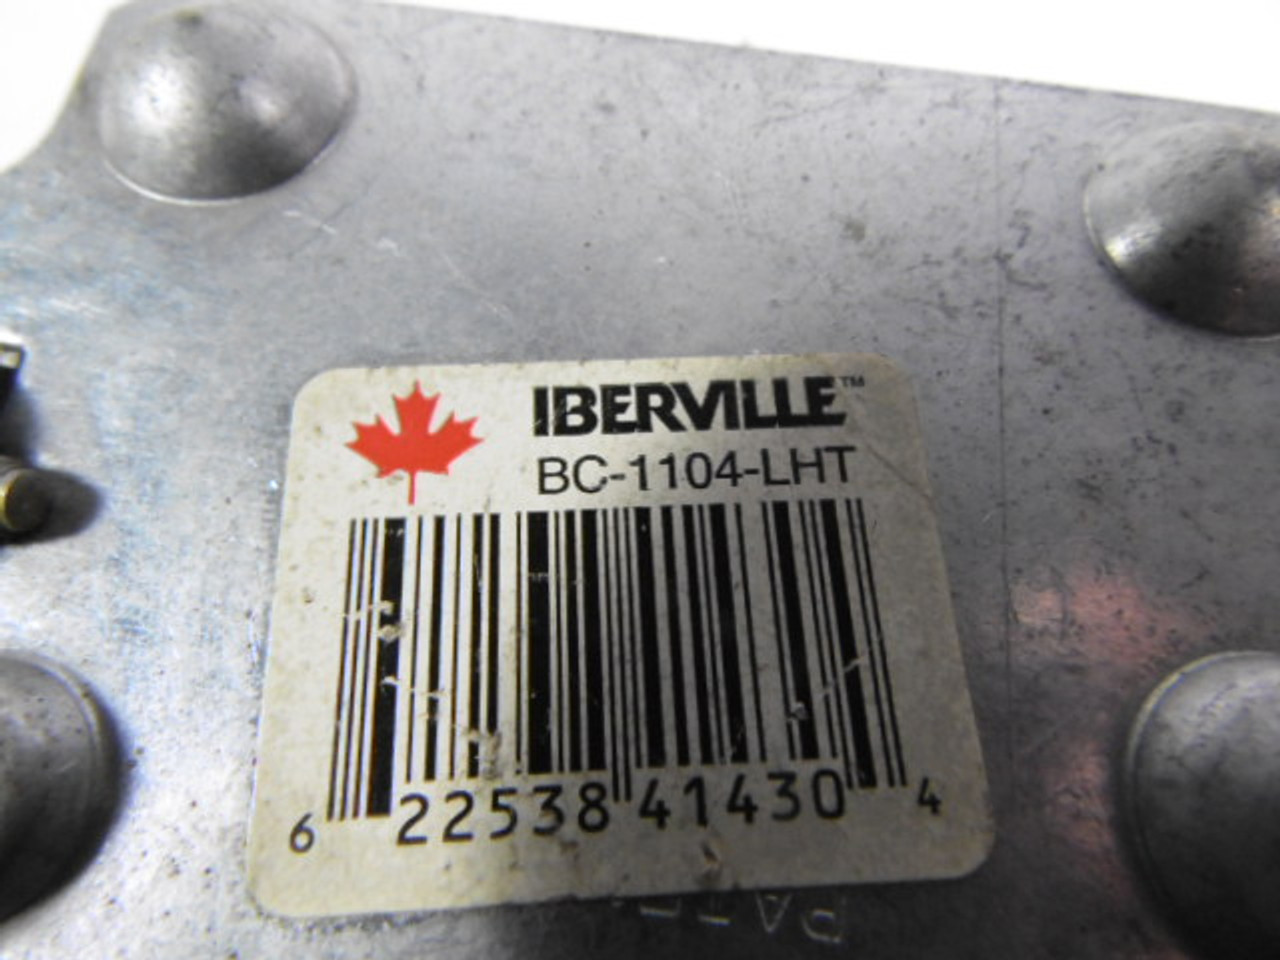 Iberville BC-1104-LHT Gangable Box 3x2x2" USED